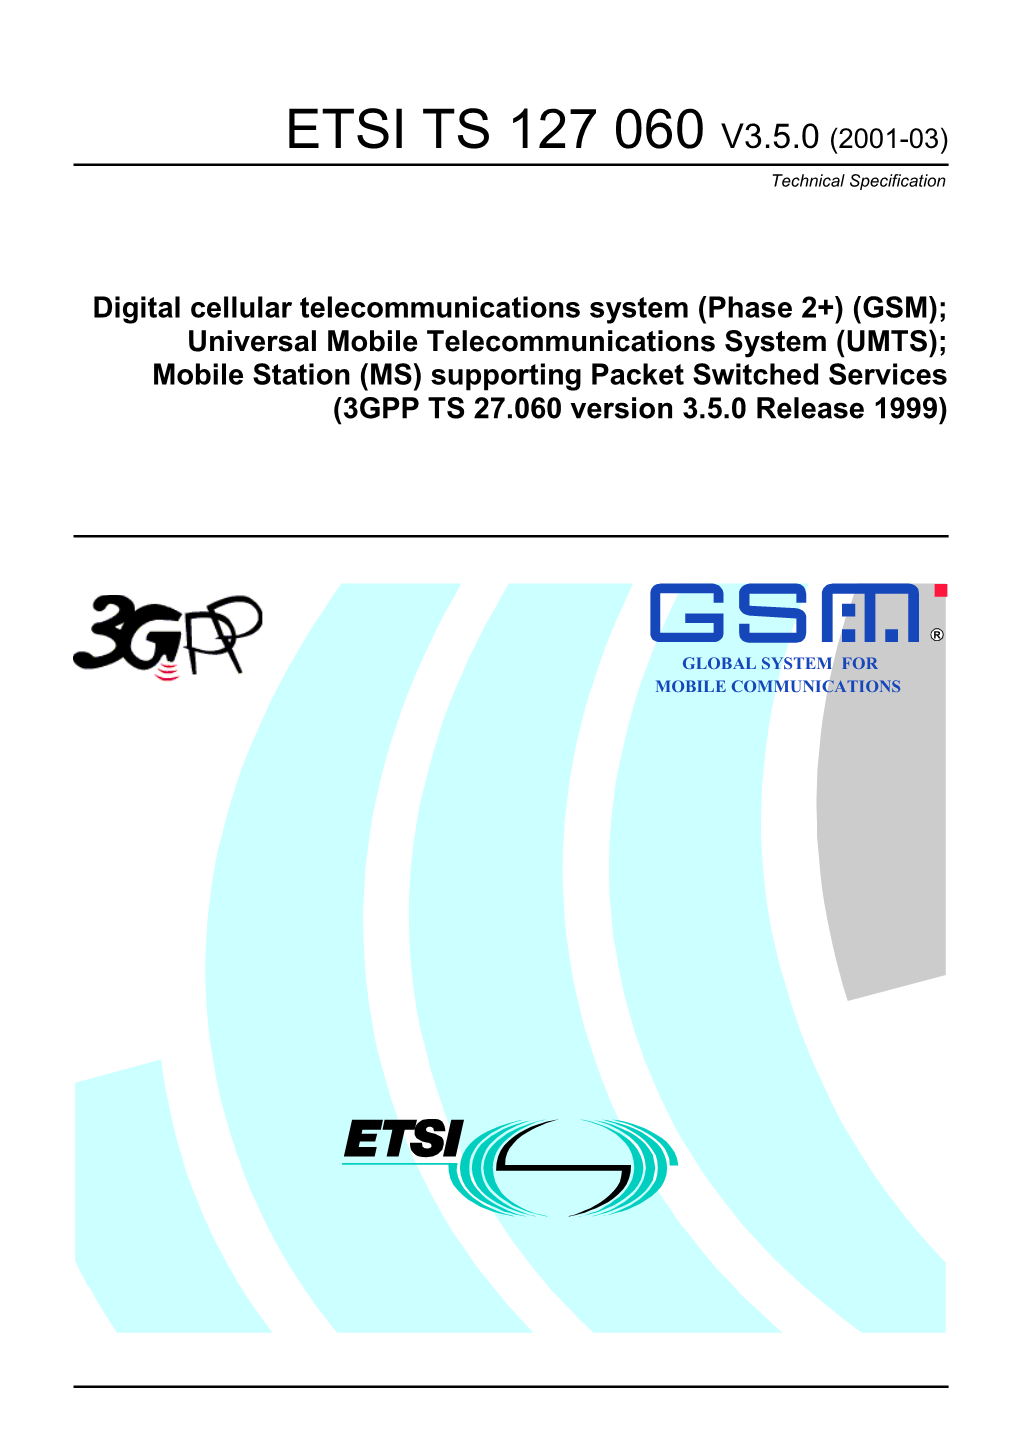 ETSI TS 127 060 V3.5.0 (2001-03) Technical Specification